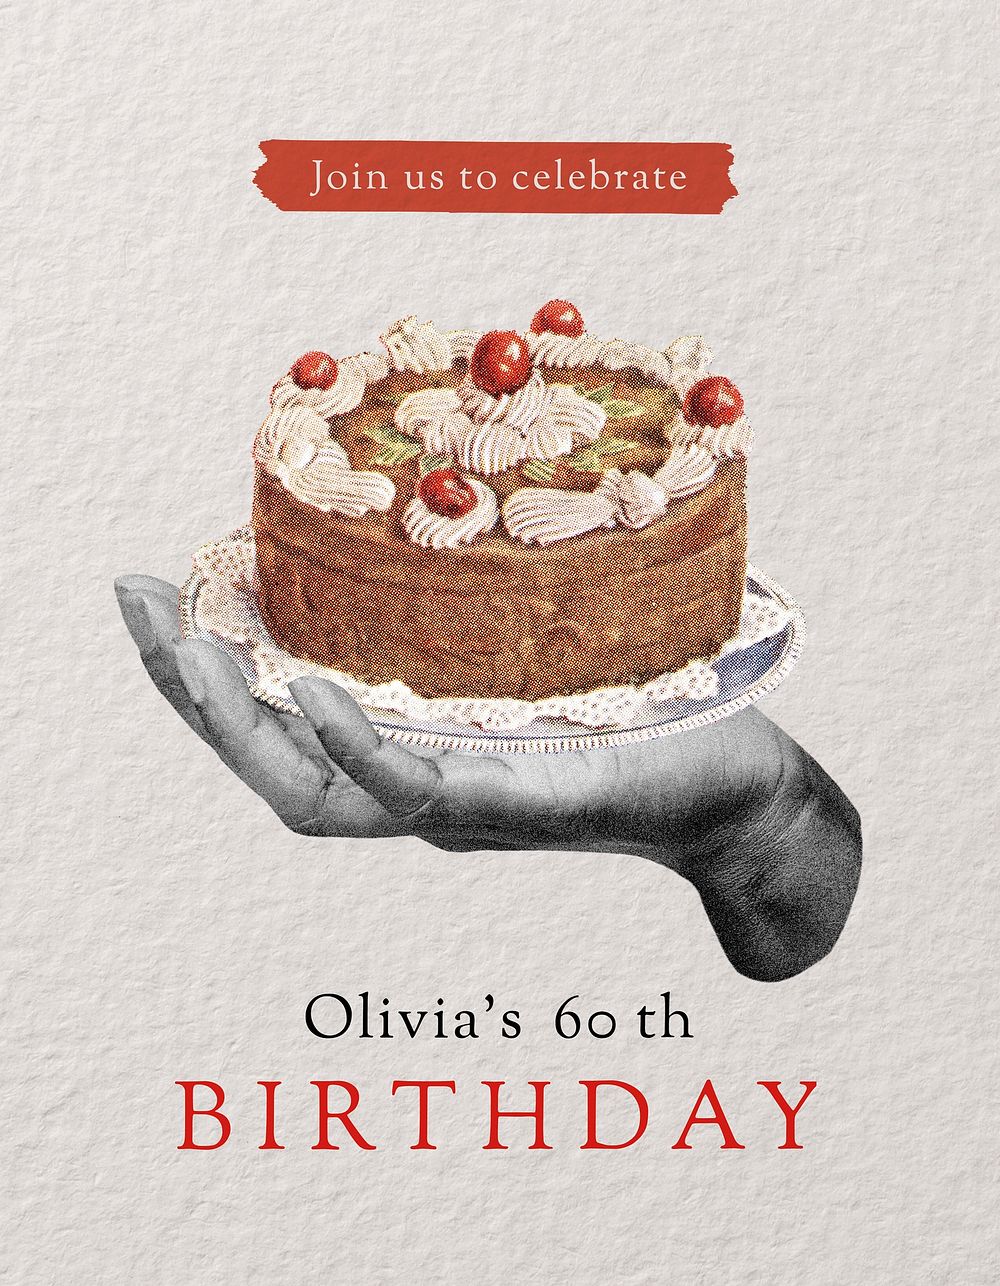 Vintage birthday flyer template, cake illustration vector